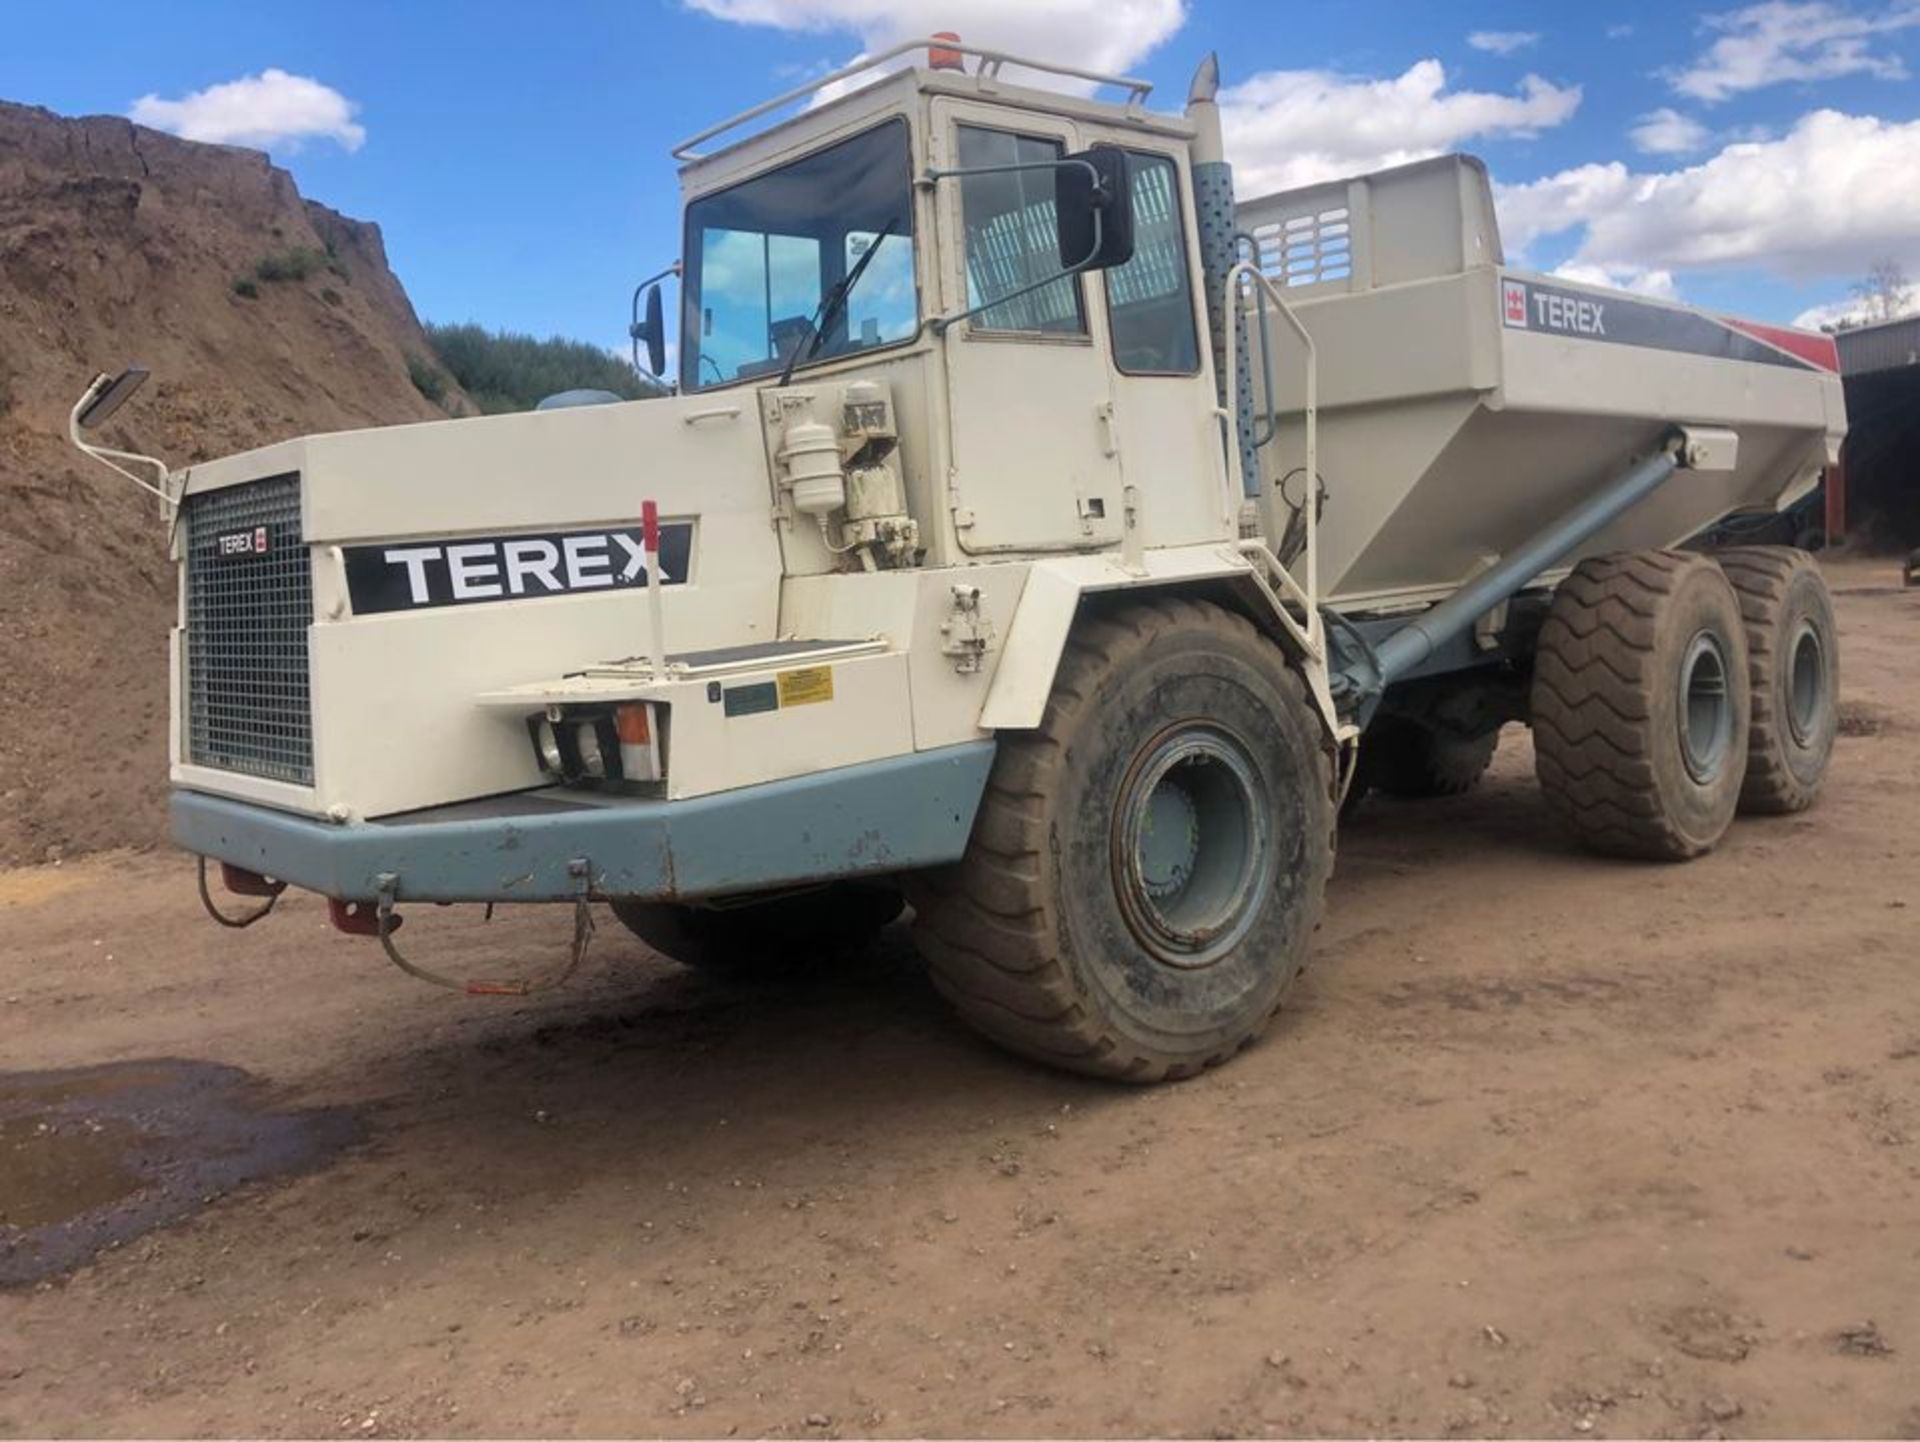 1996 Terex 25 tonne articulated dump truck - Image 2 of 10